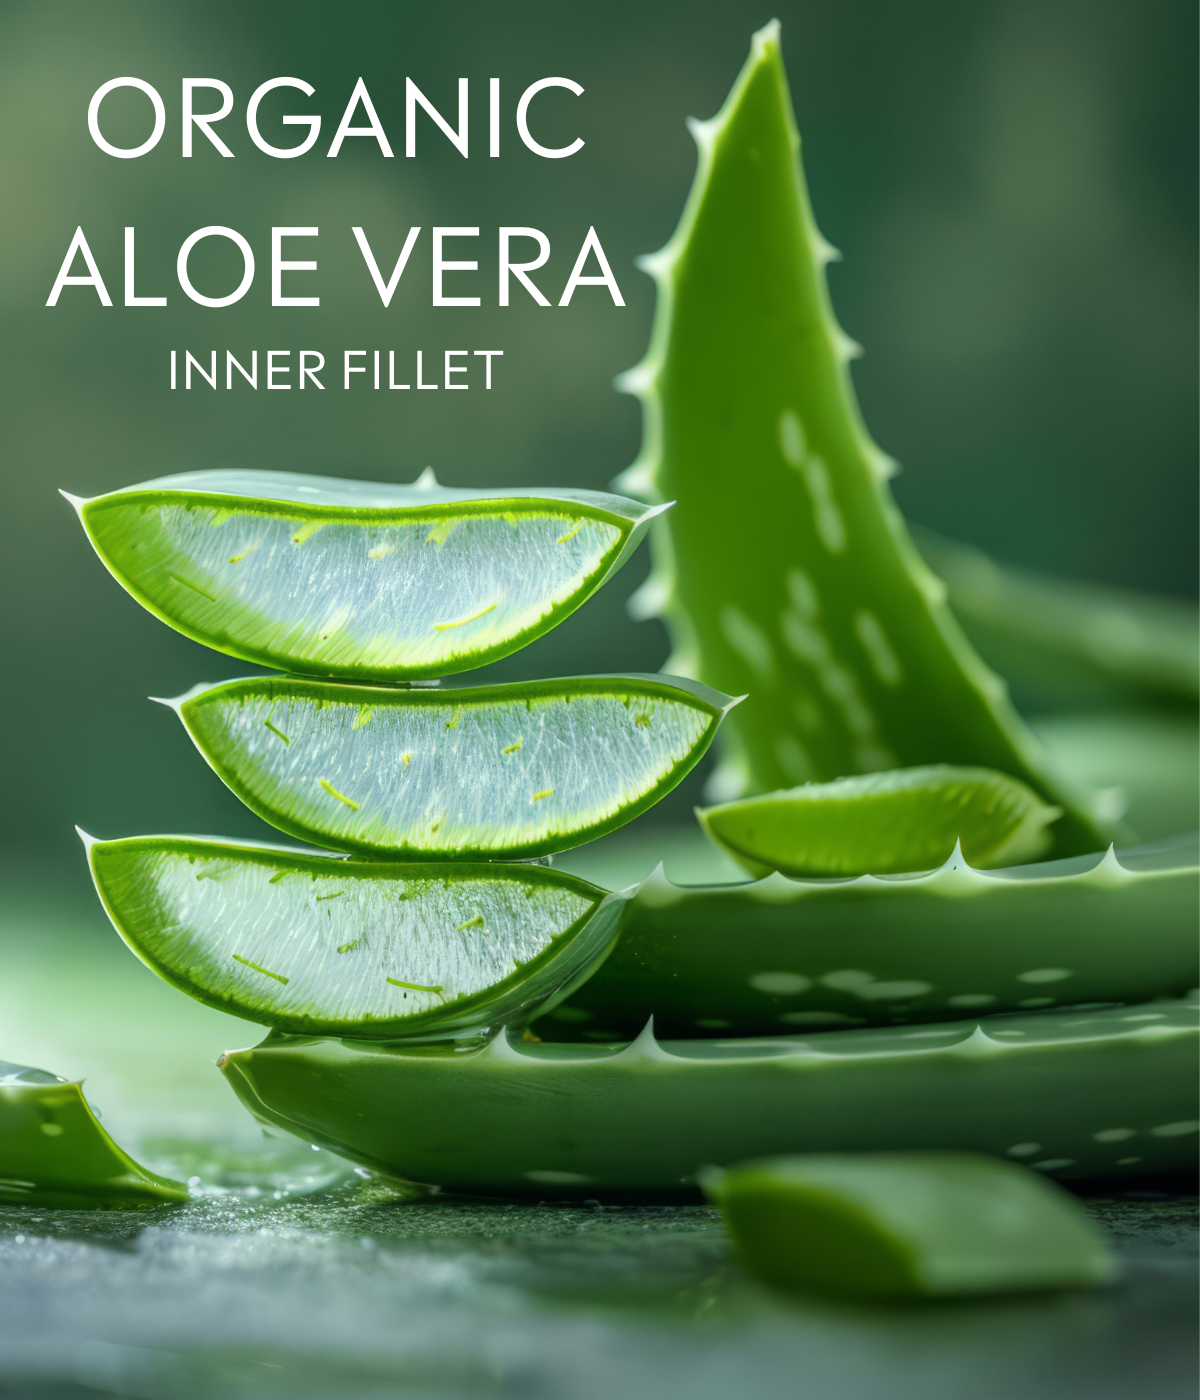 Essential Oxygen Organic Aloe Vera Inner Fillet Aloe Vera Leaf Inner Fillet Oral Care